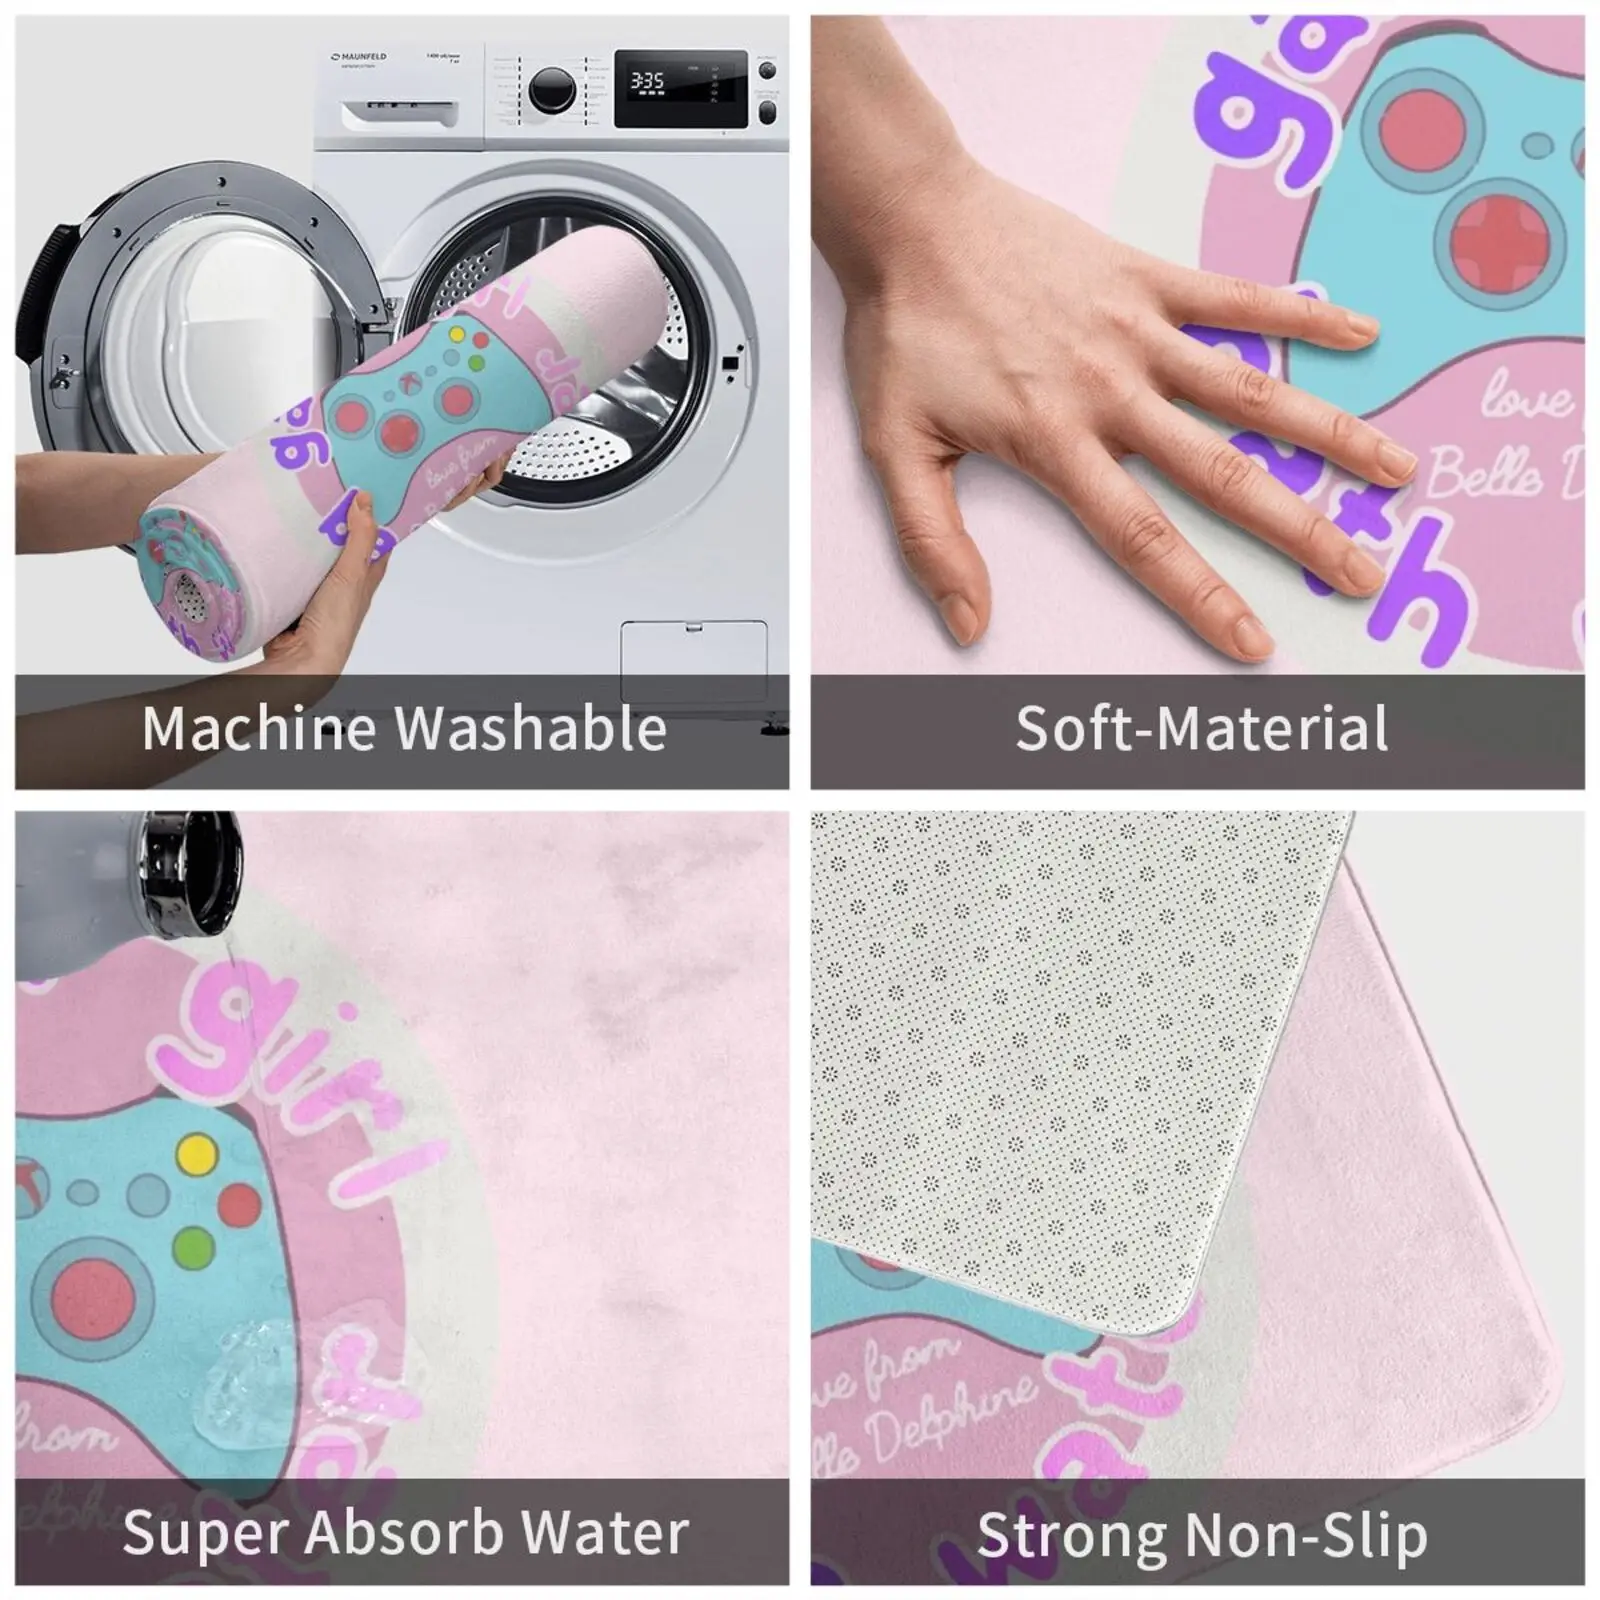 Belle Delphine - gamer girl bath water (rainbow pink), Gamer girl - Belle  Delphine - Sticker